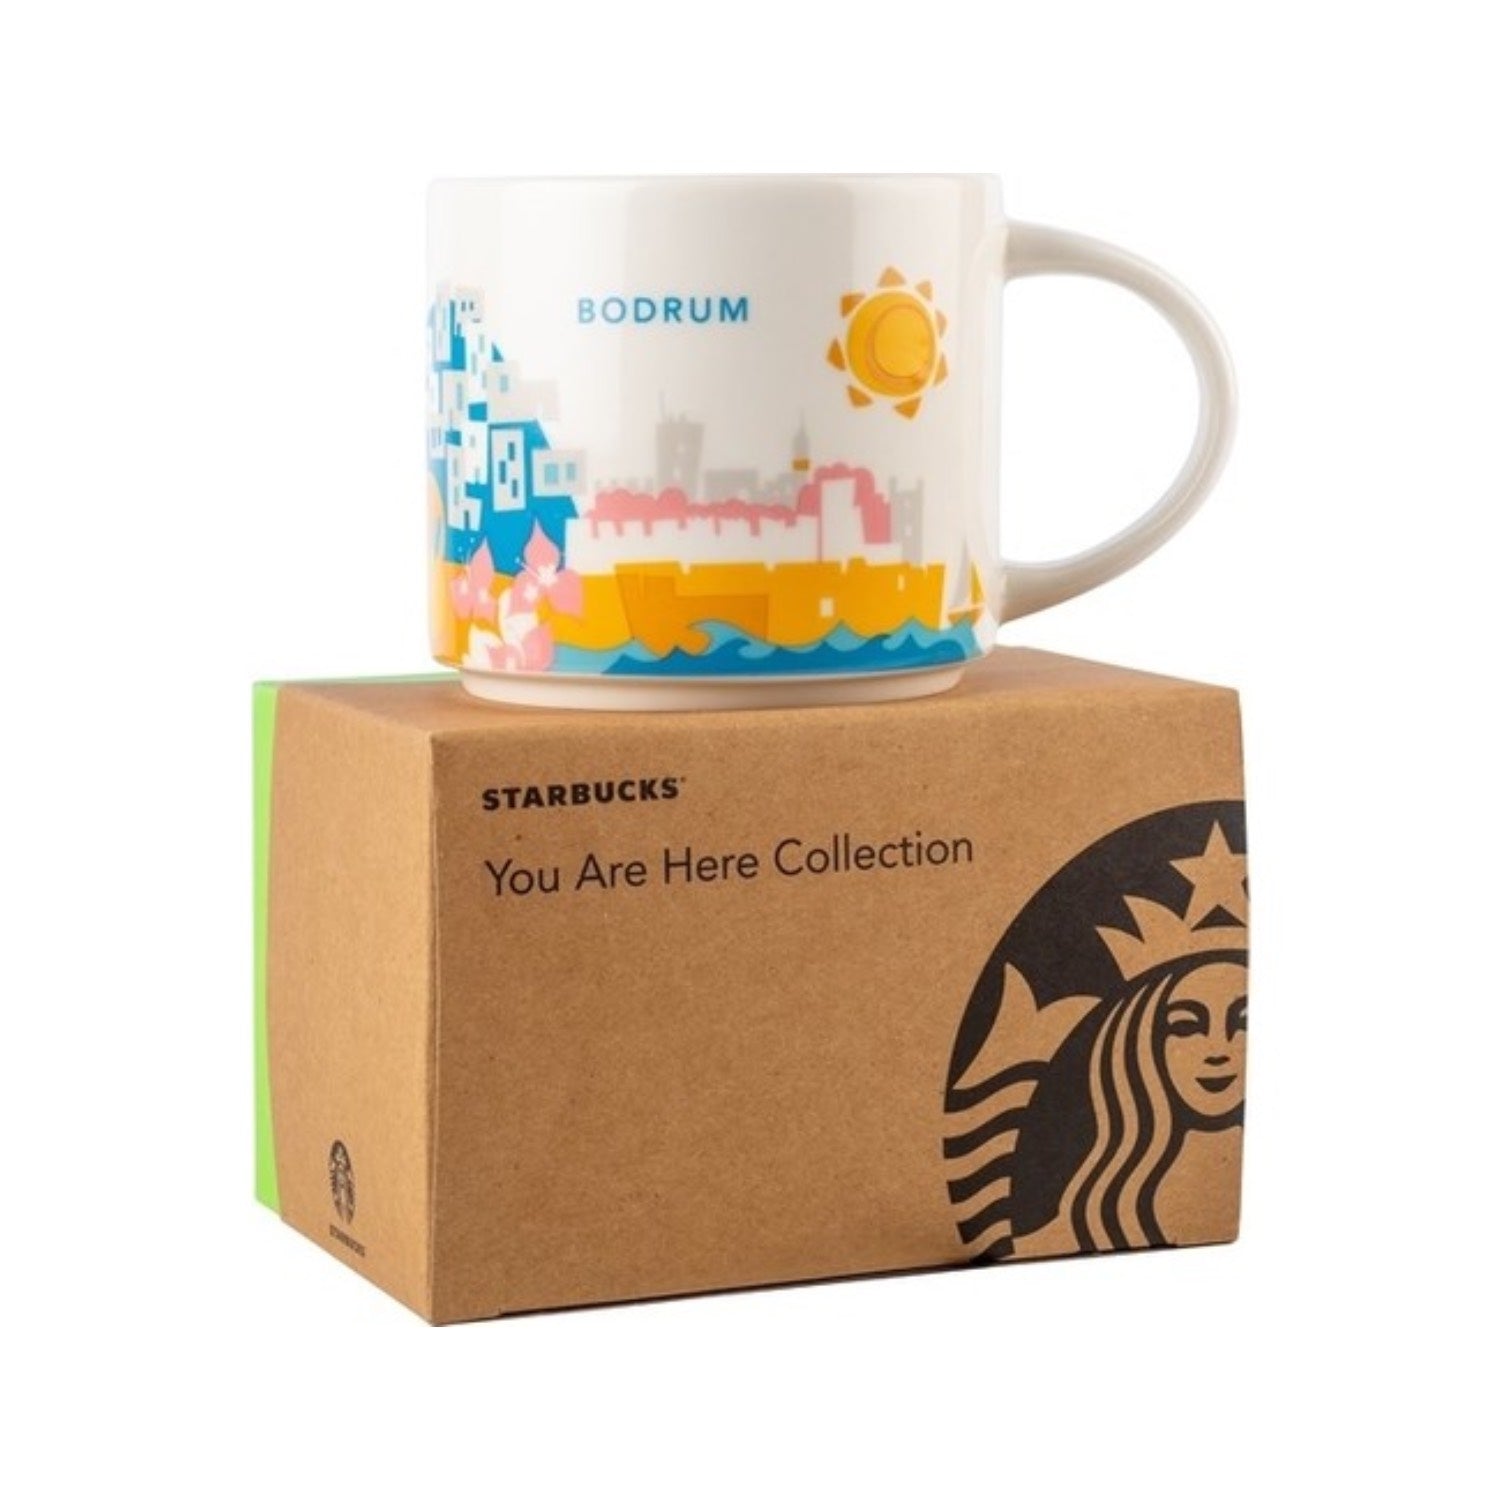 Starbucks Bodrum City Themed Mug Series 14 oz